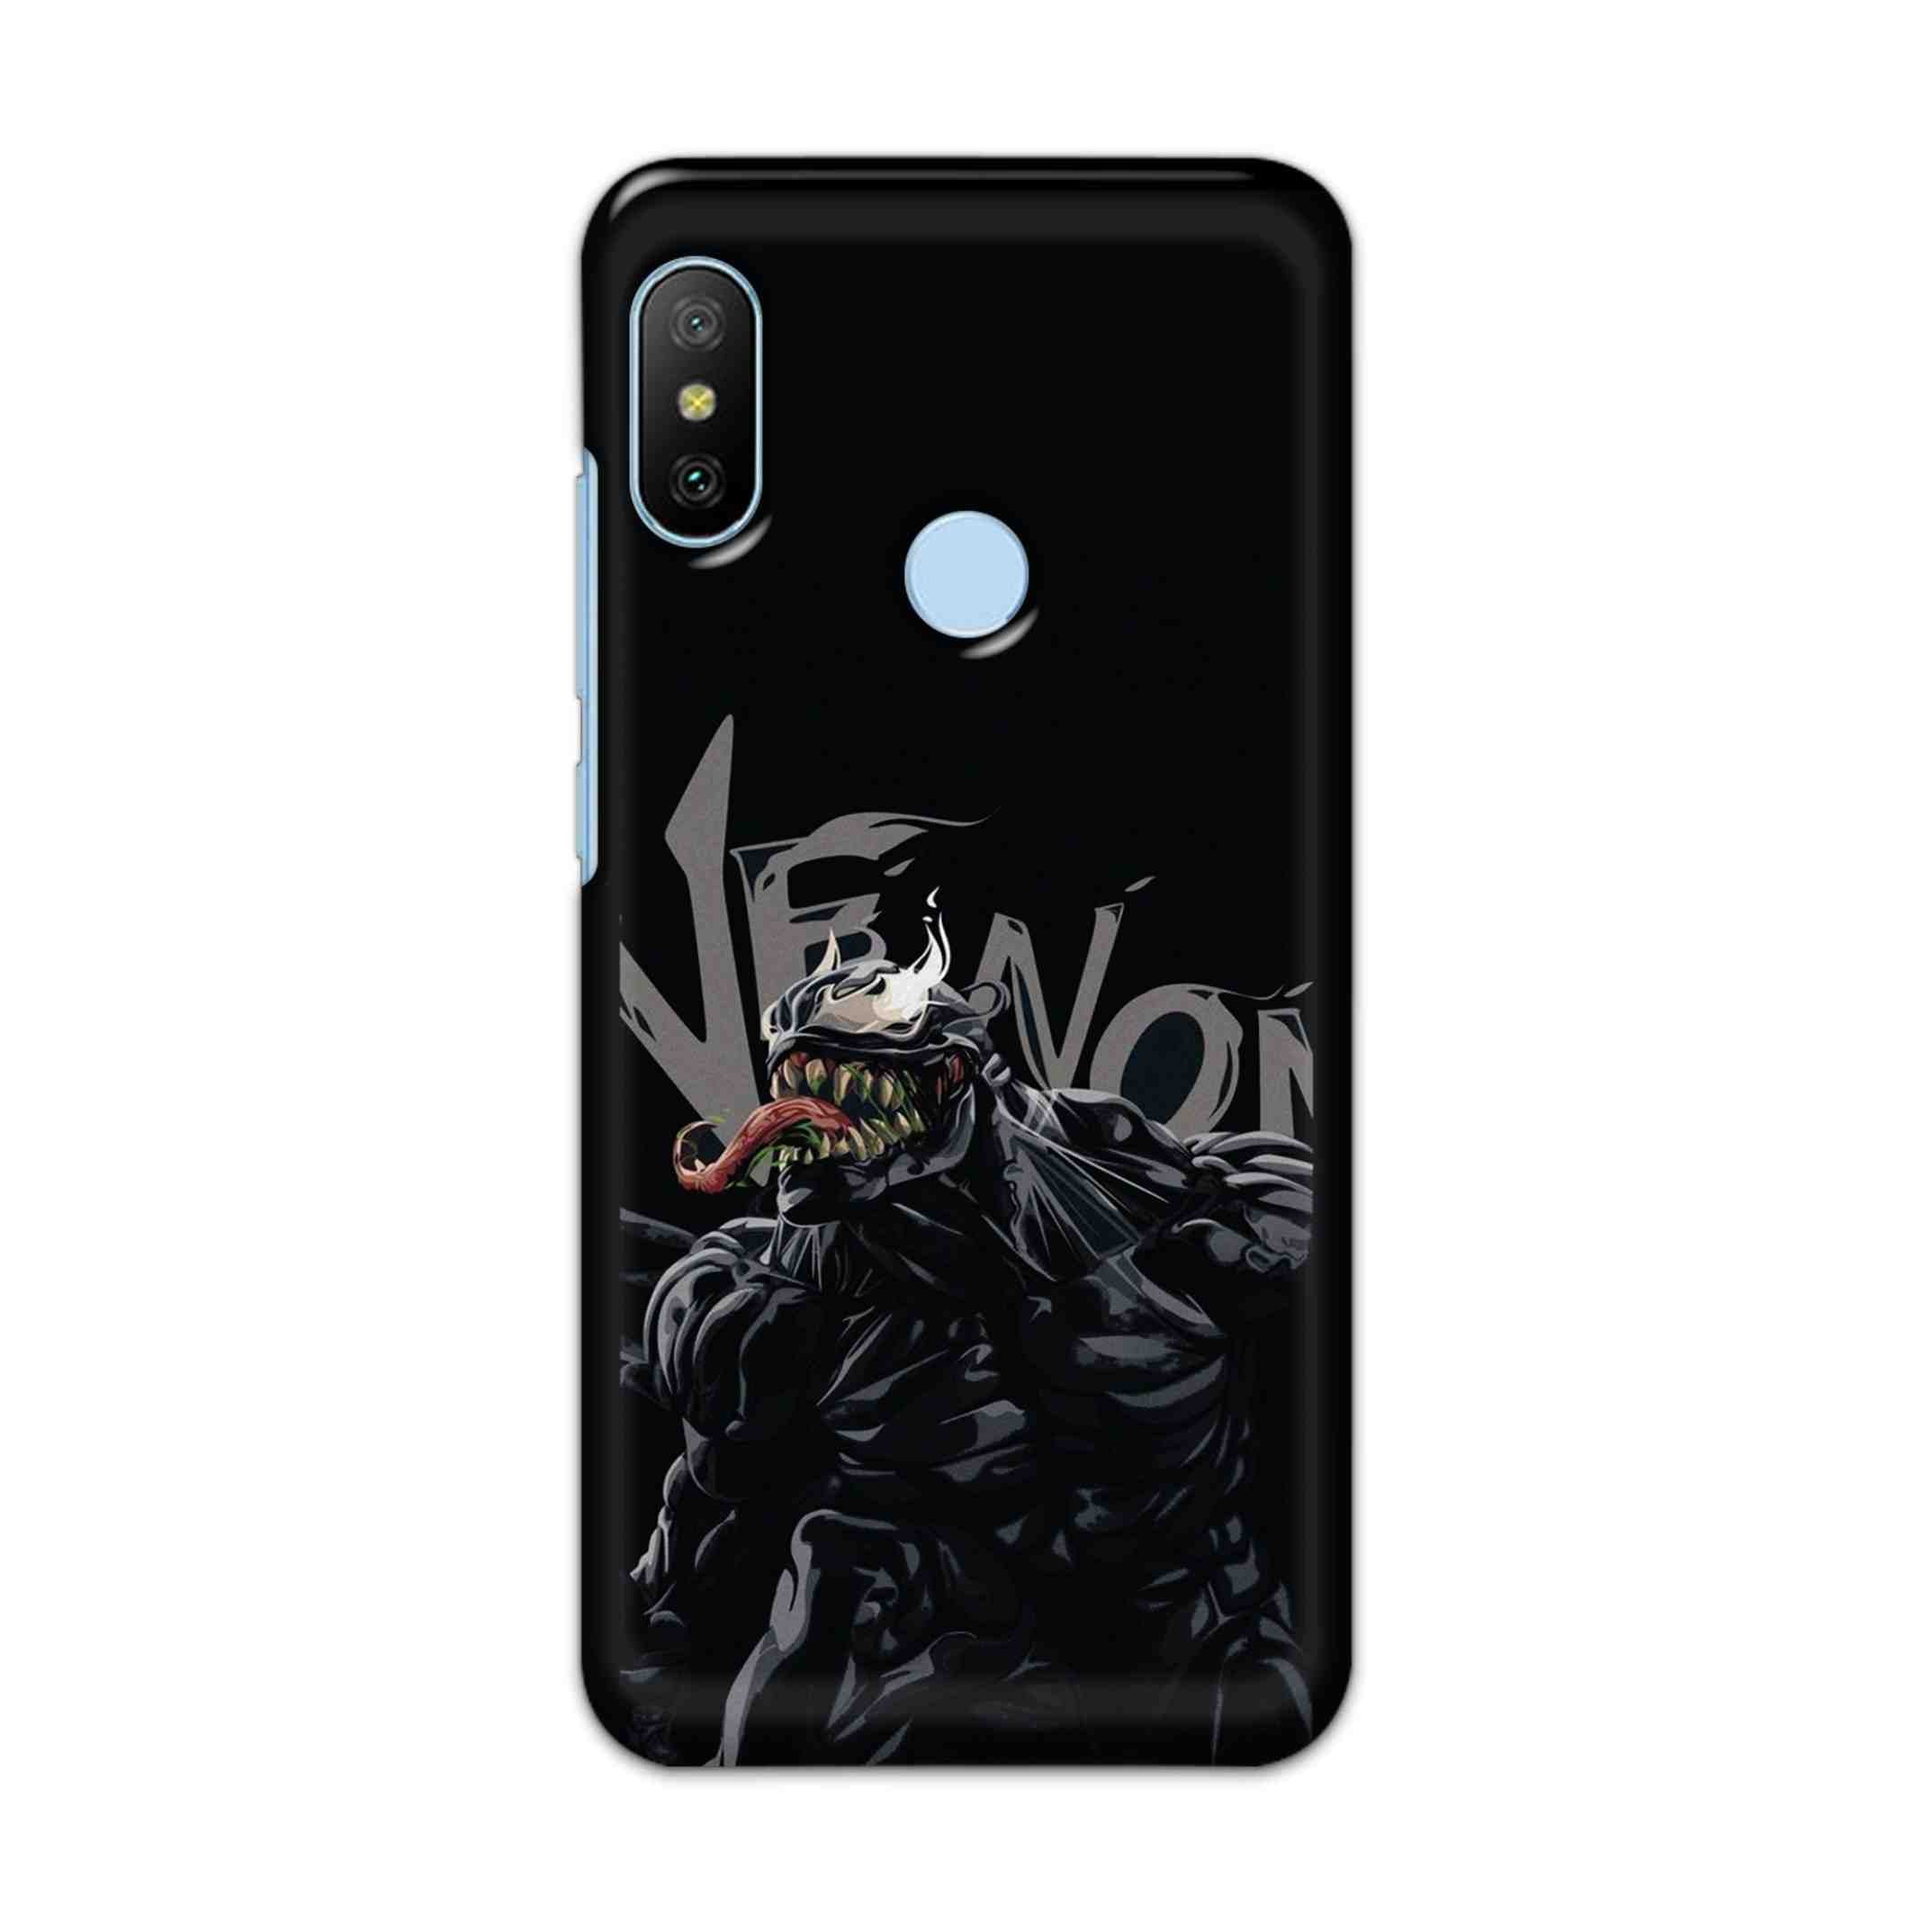 Buy  Venom Hard Back Mobile Phone Case/Cover For Xiaomi Redmi 6 Pro Online